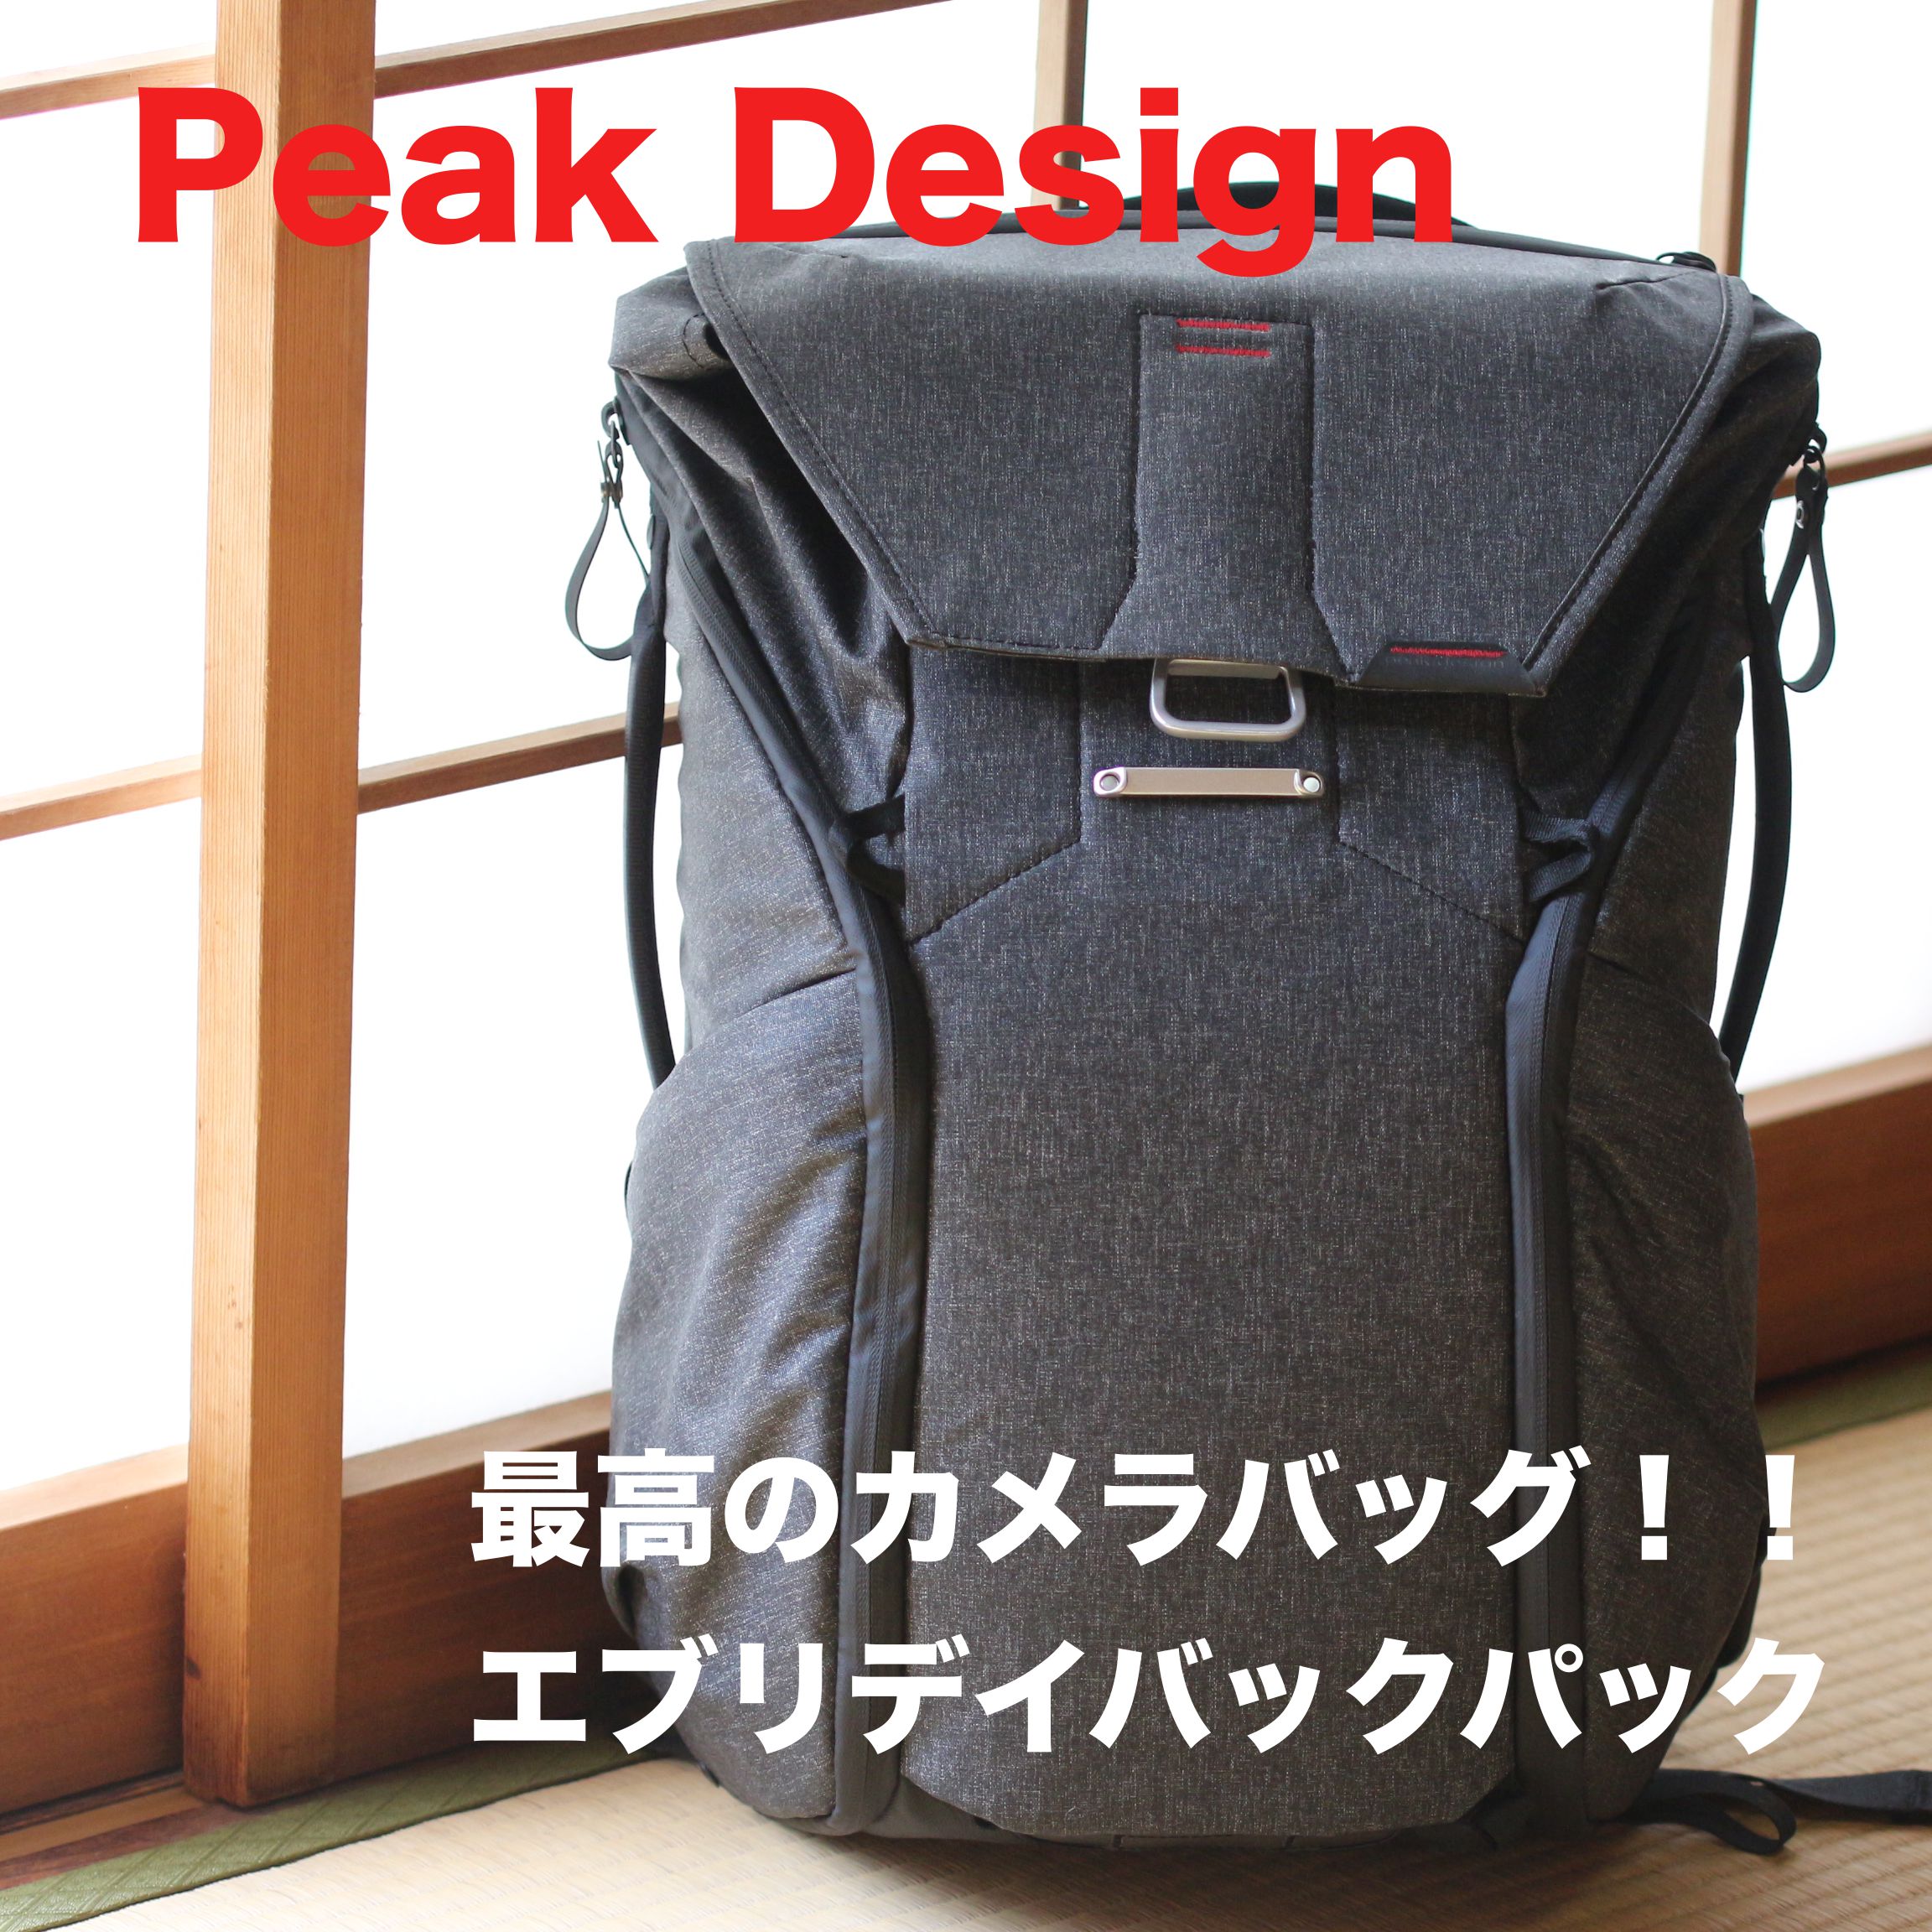 Peak Design Everyday Backpack Review